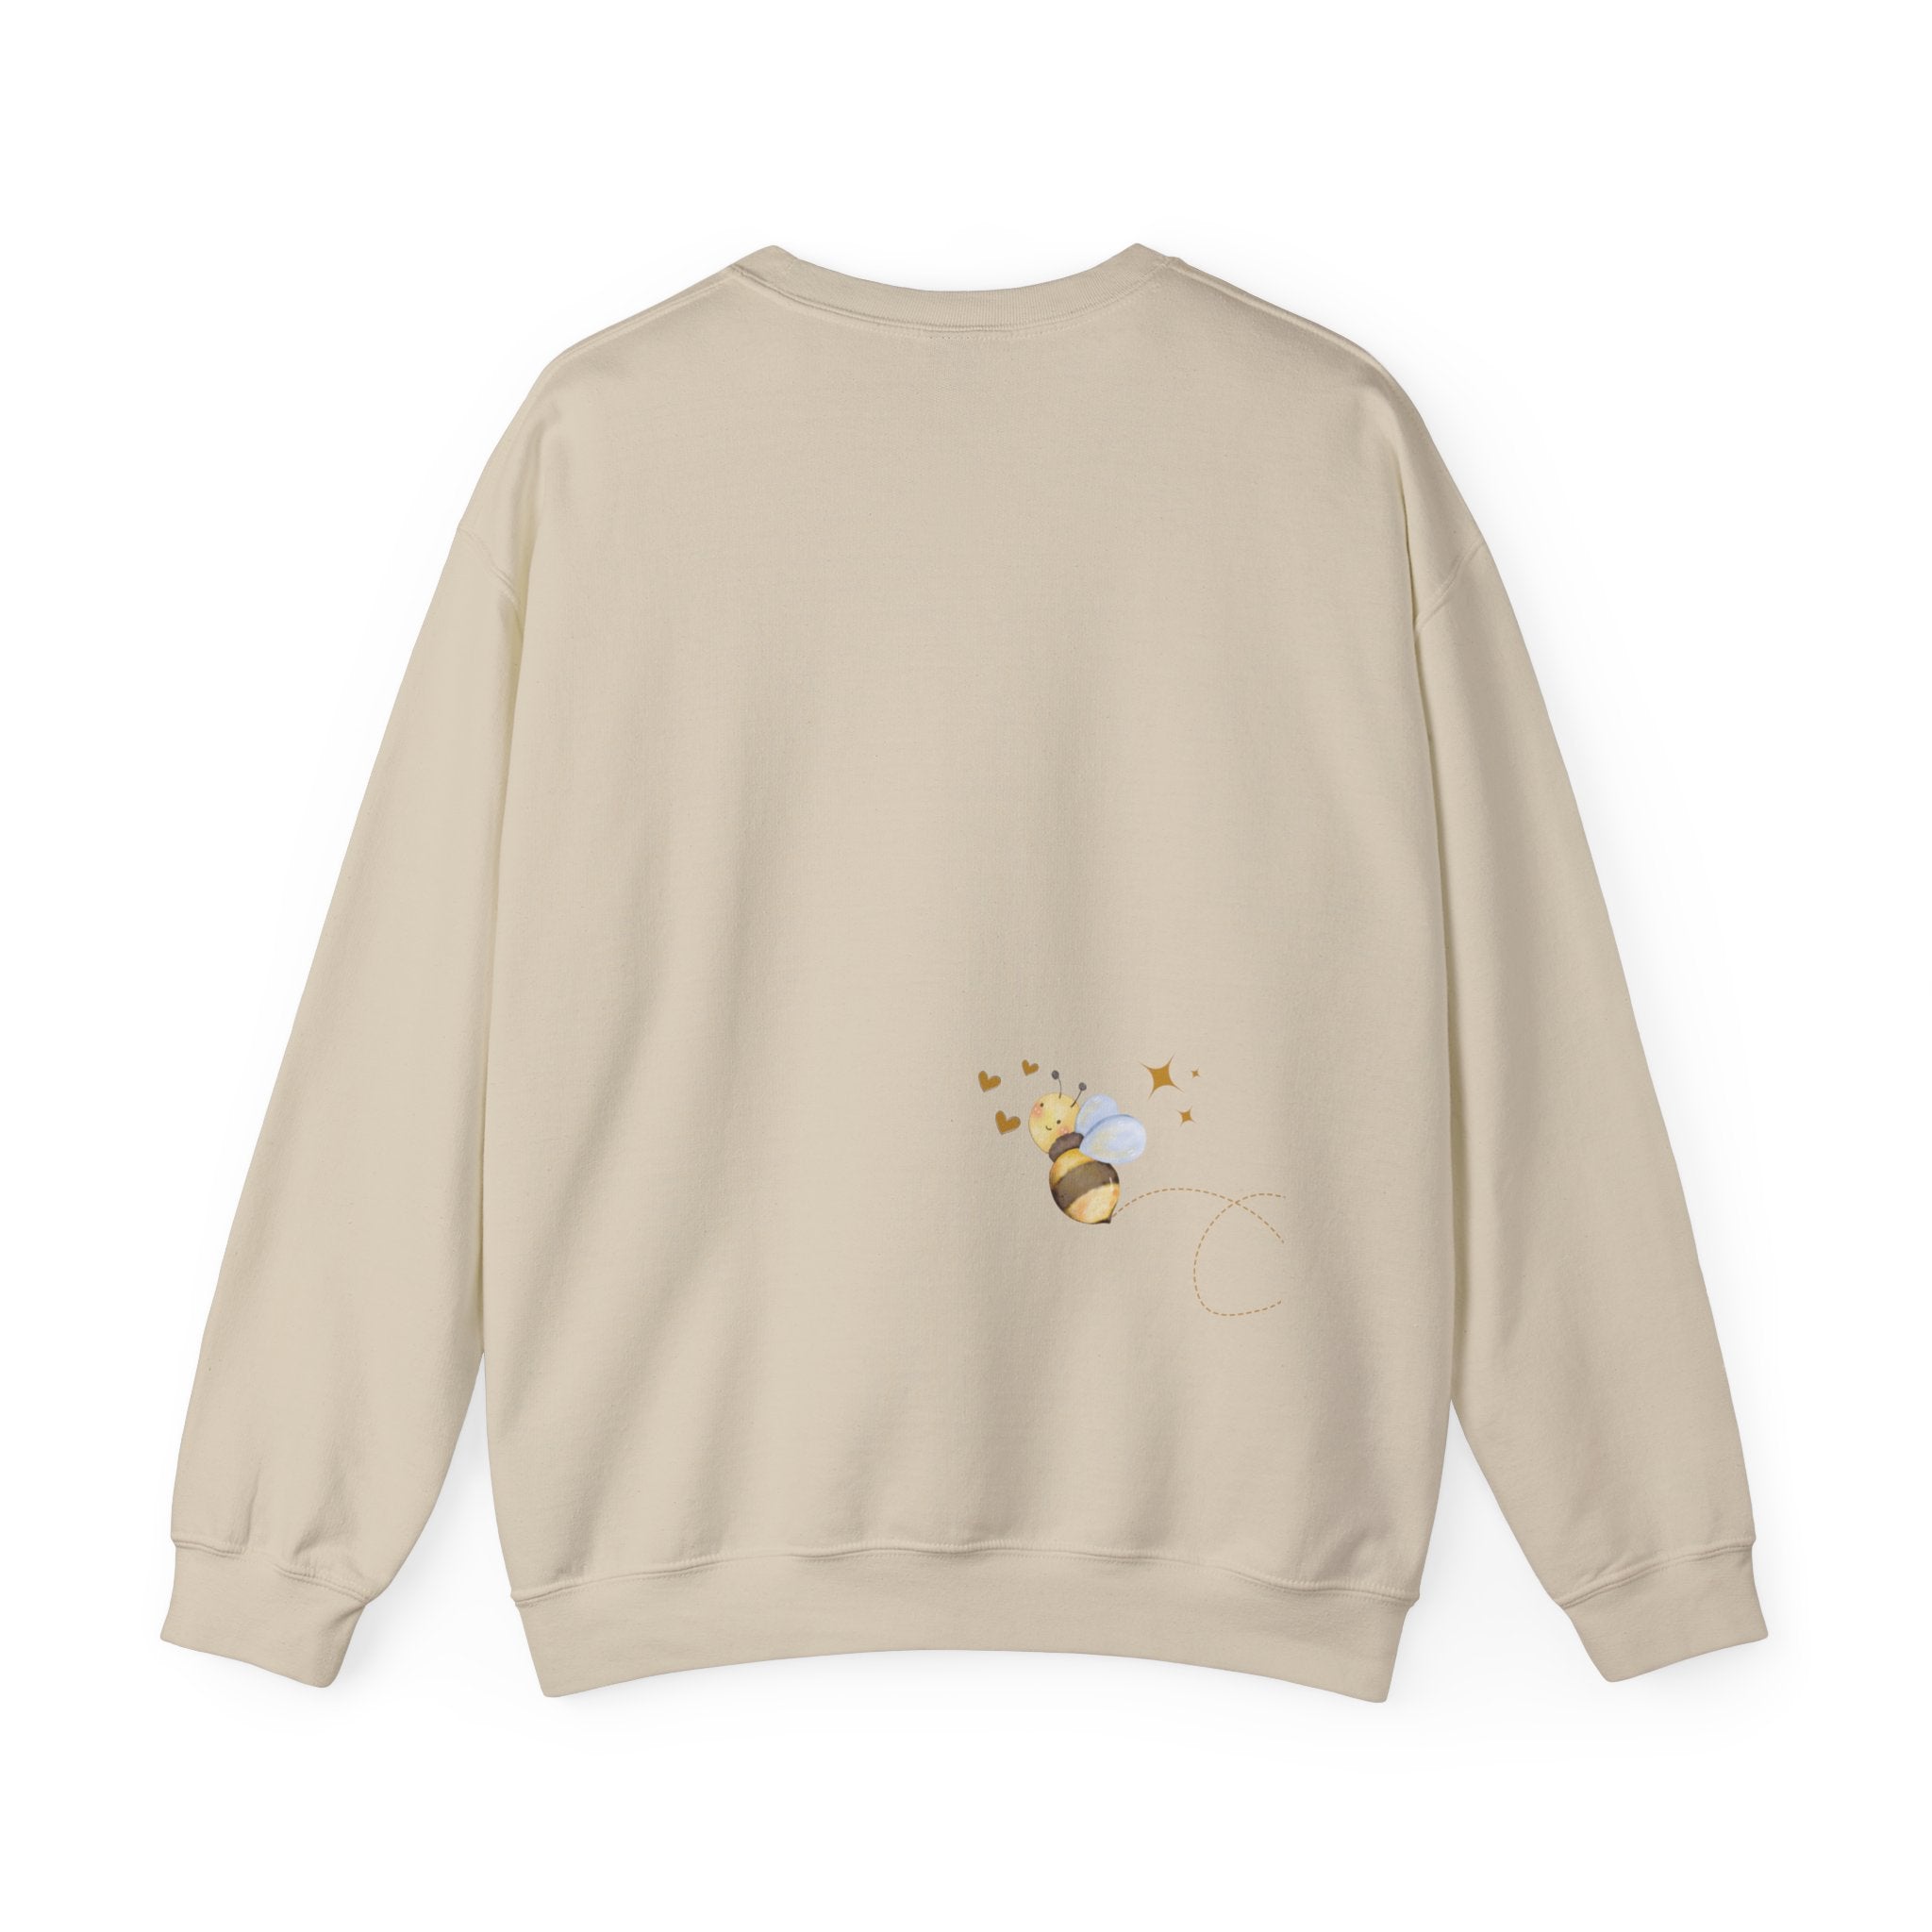 Just Beecause bumblebee inspired ladies Unisex Sweatshirt